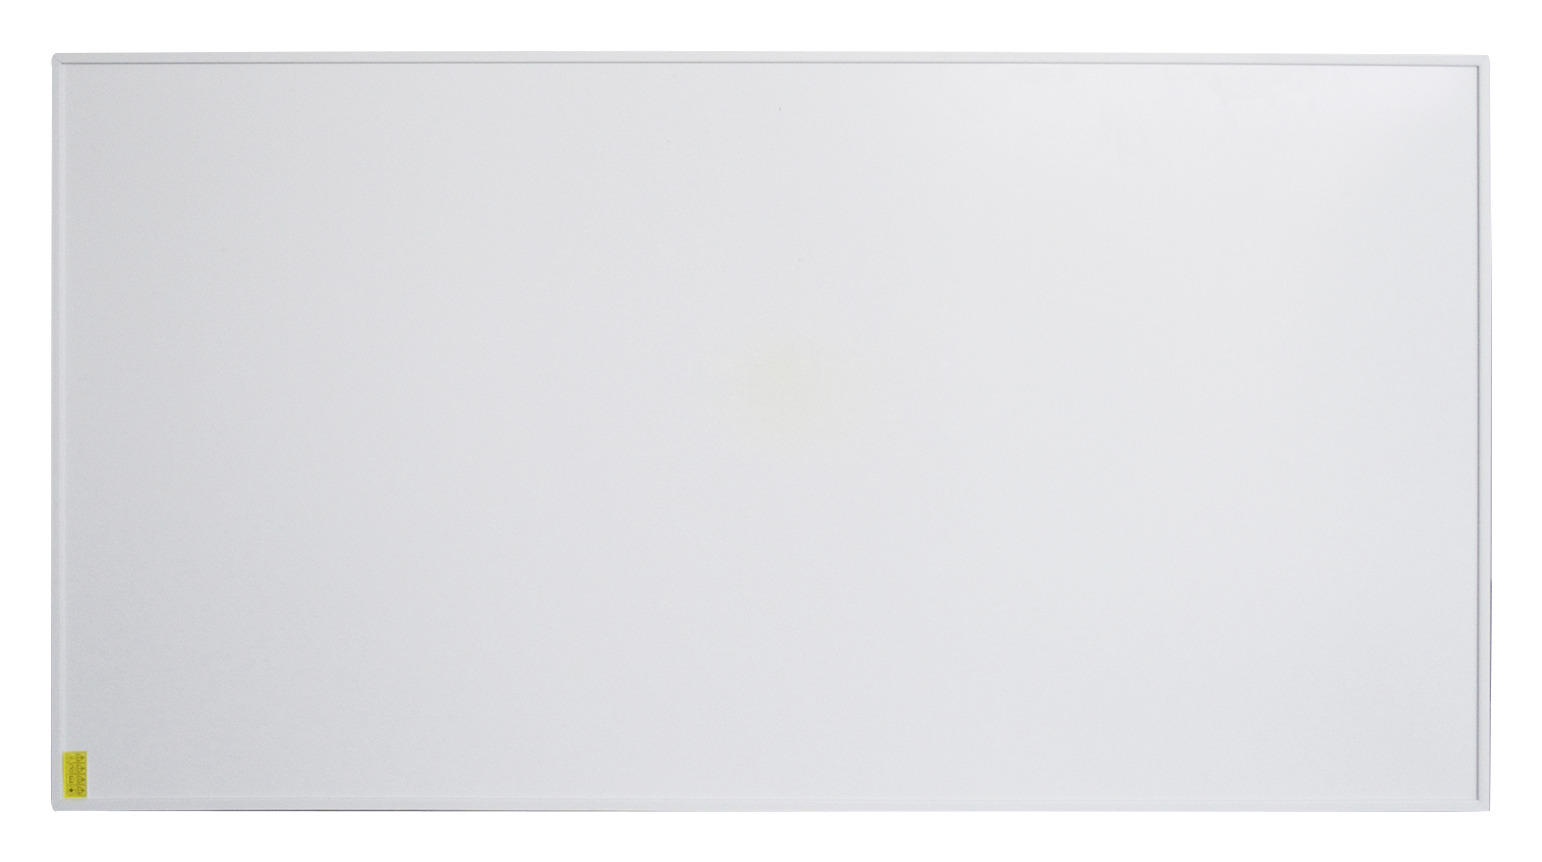 INFRAROT-HEIZPANEEL 70/59,5/2,2 cm 420 W Ambiente  - Weiß, Trend, Kunststoff/Metall (70/59,5/2,2cm) - Atrigo